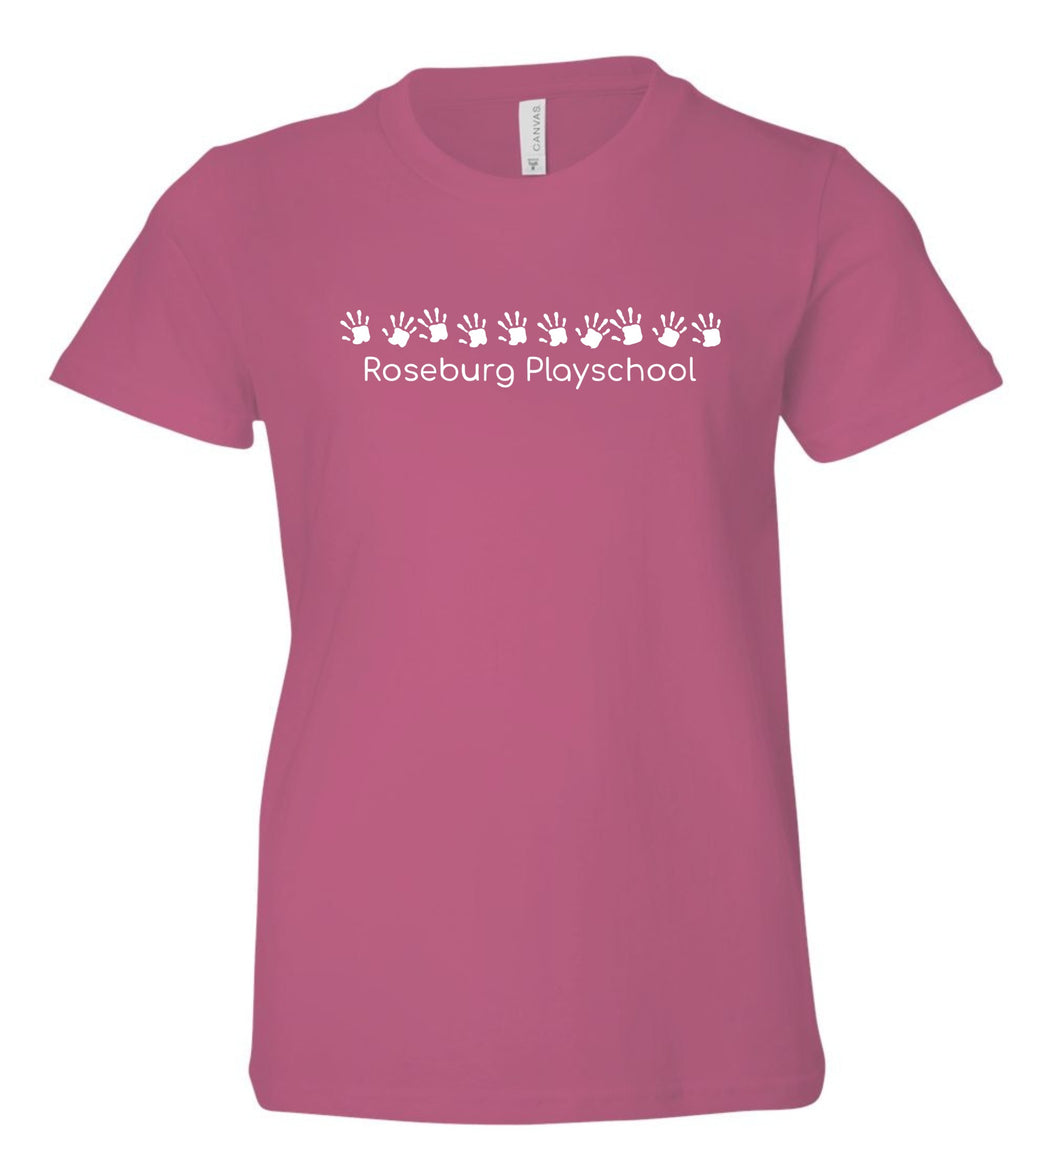 Roseburg Playschool YOUTH T-shirt